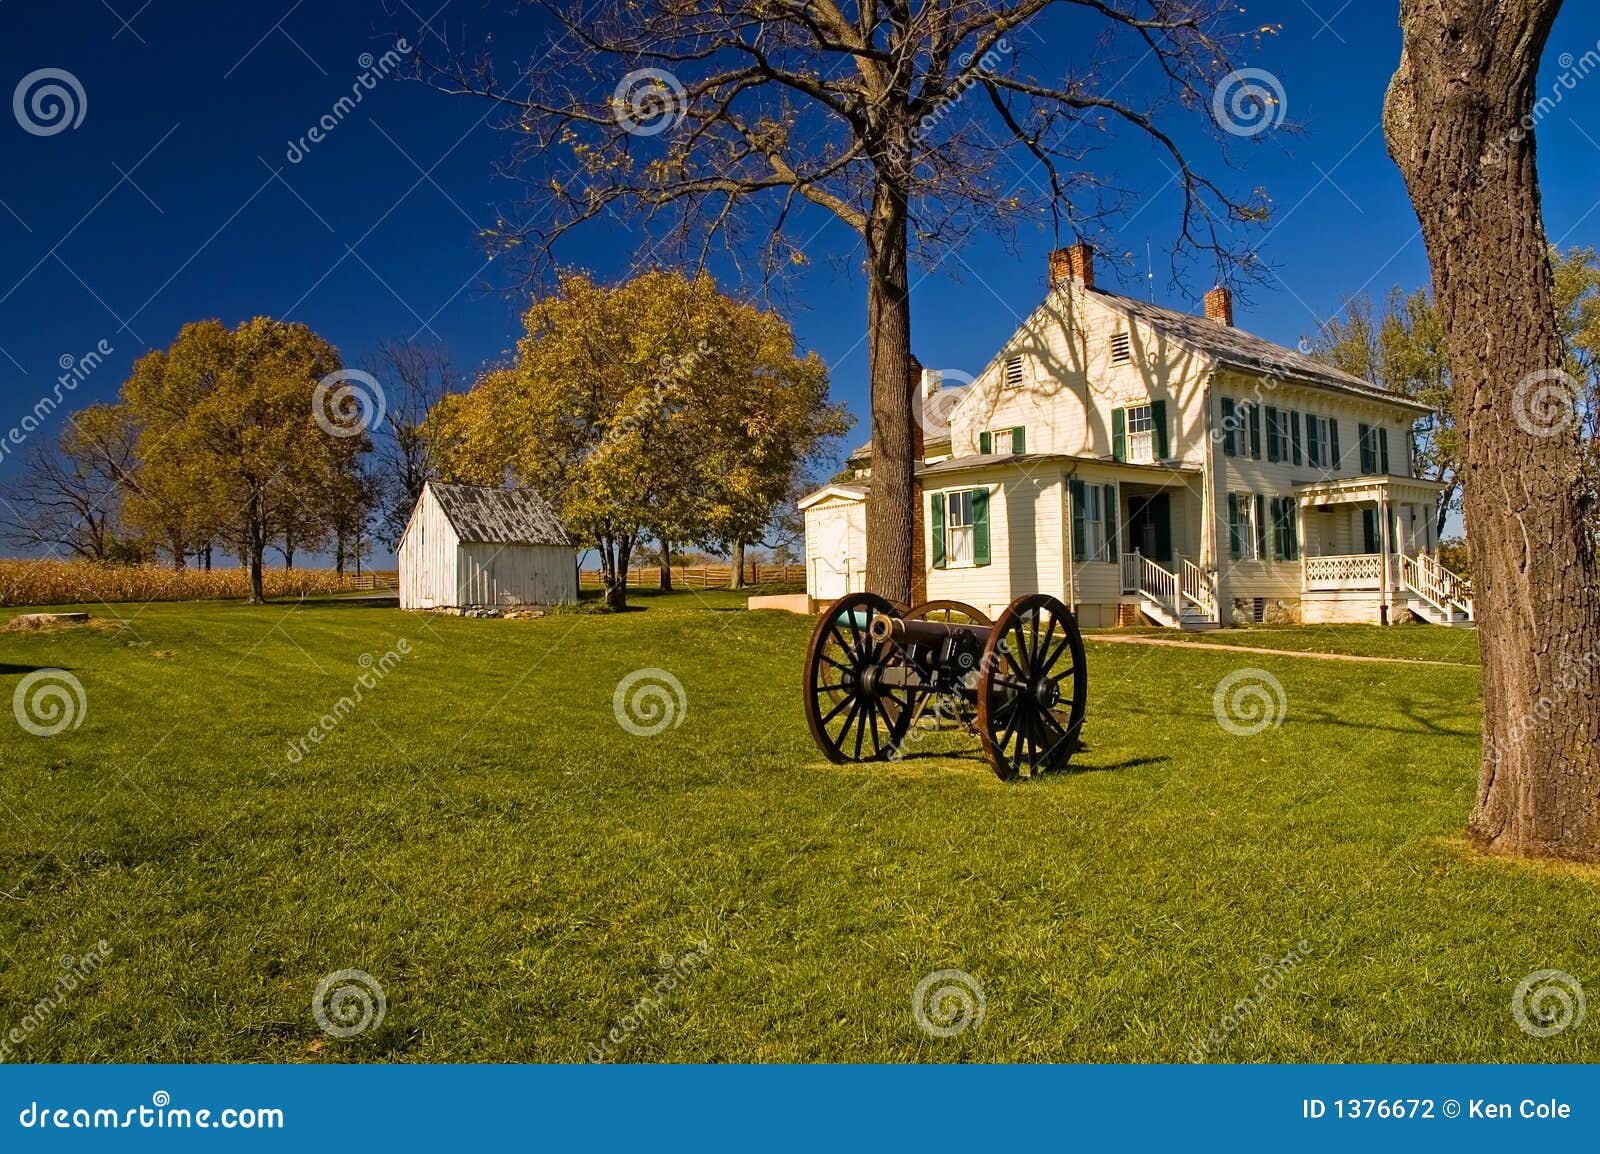 historic civil war homestead